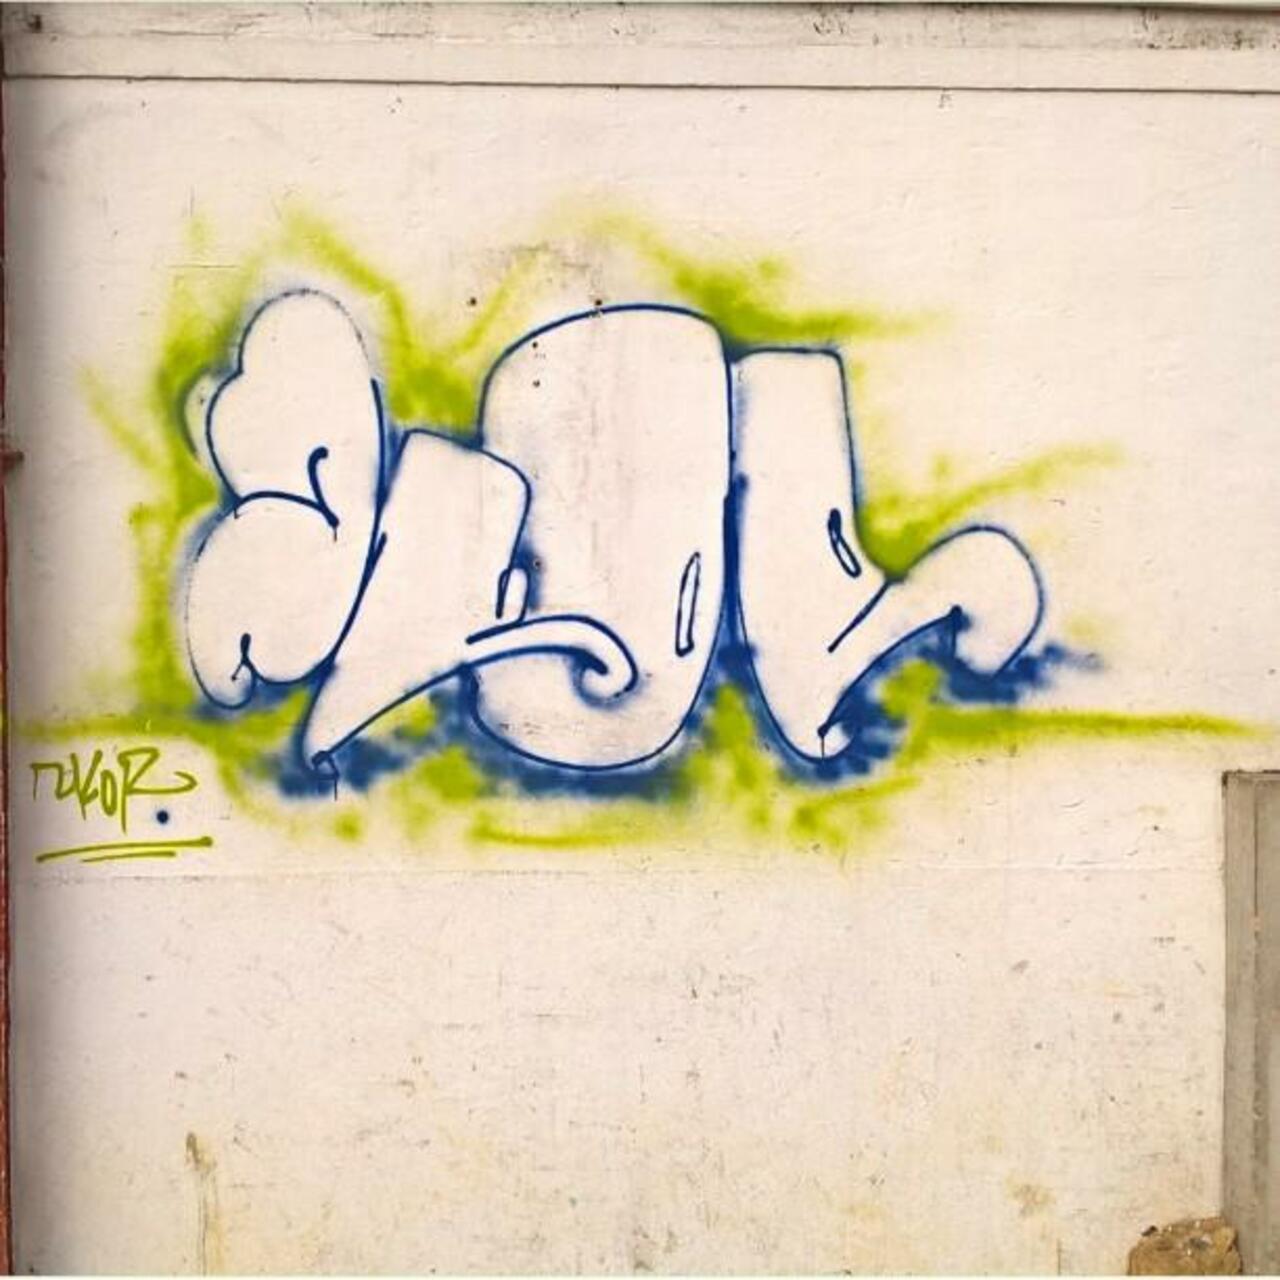 circumjacent_fr: #Paris #graffiti photo by maxdimontemarciano http://ift.tt/1GmeYIW #StreetArt https://t.co/OTxKomizup